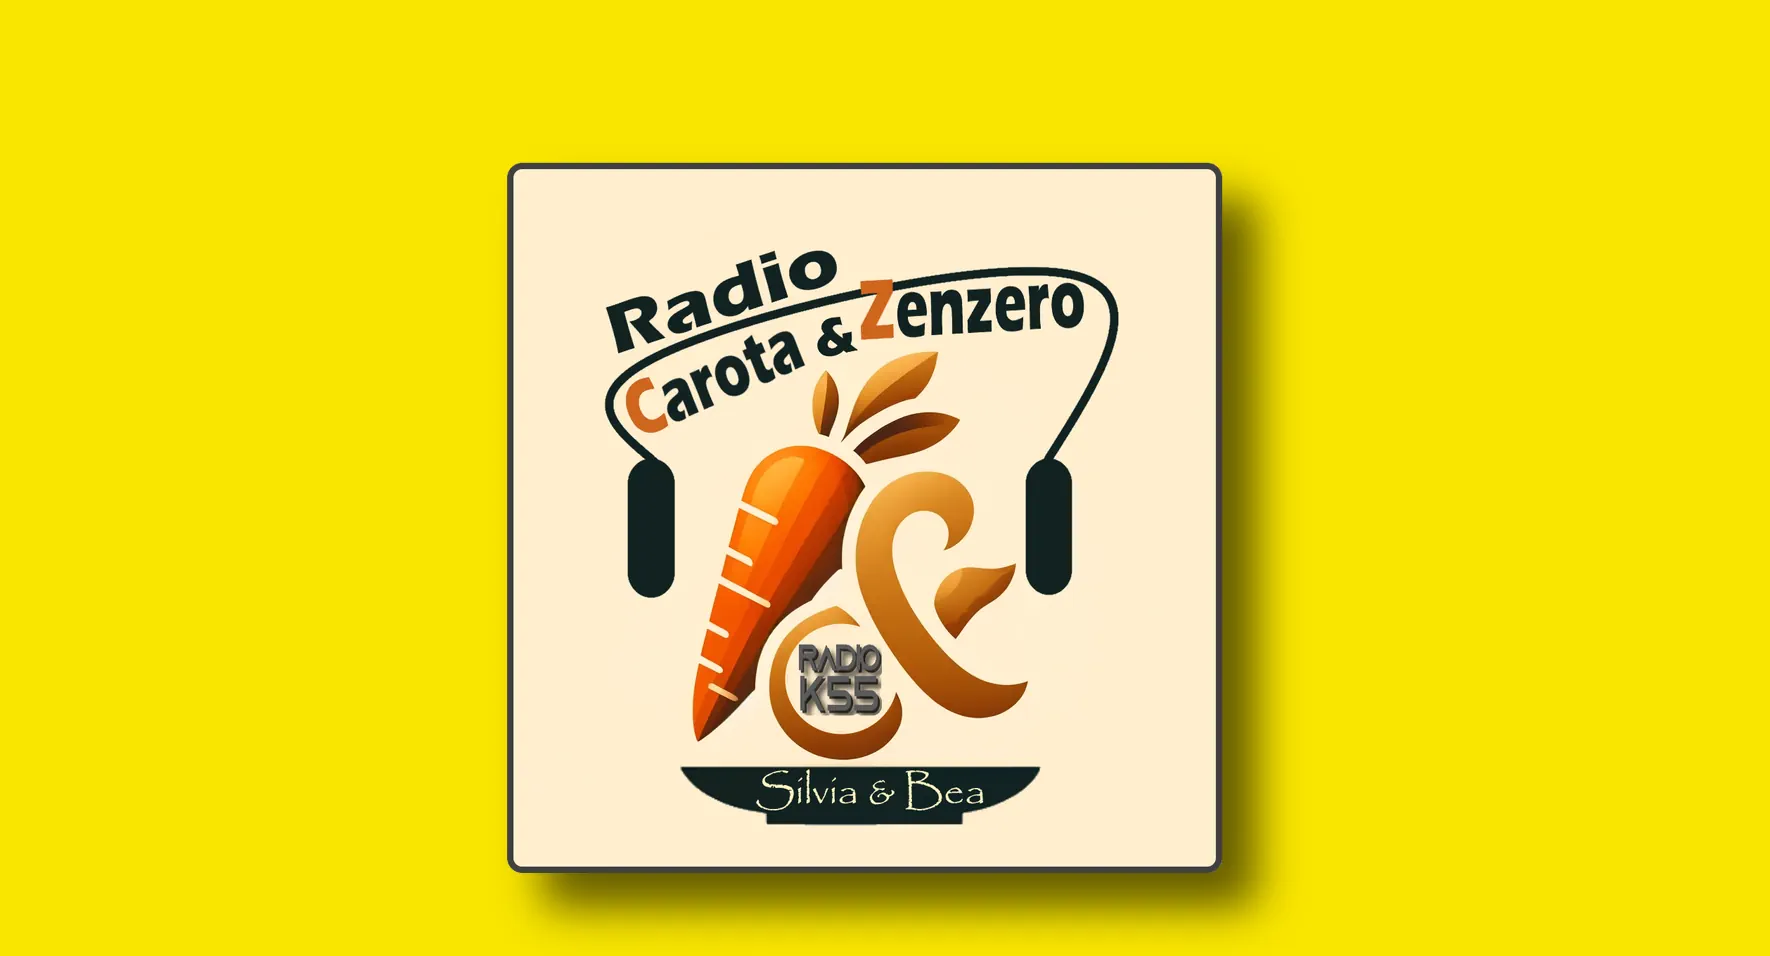 Radio Carota e Zenzero